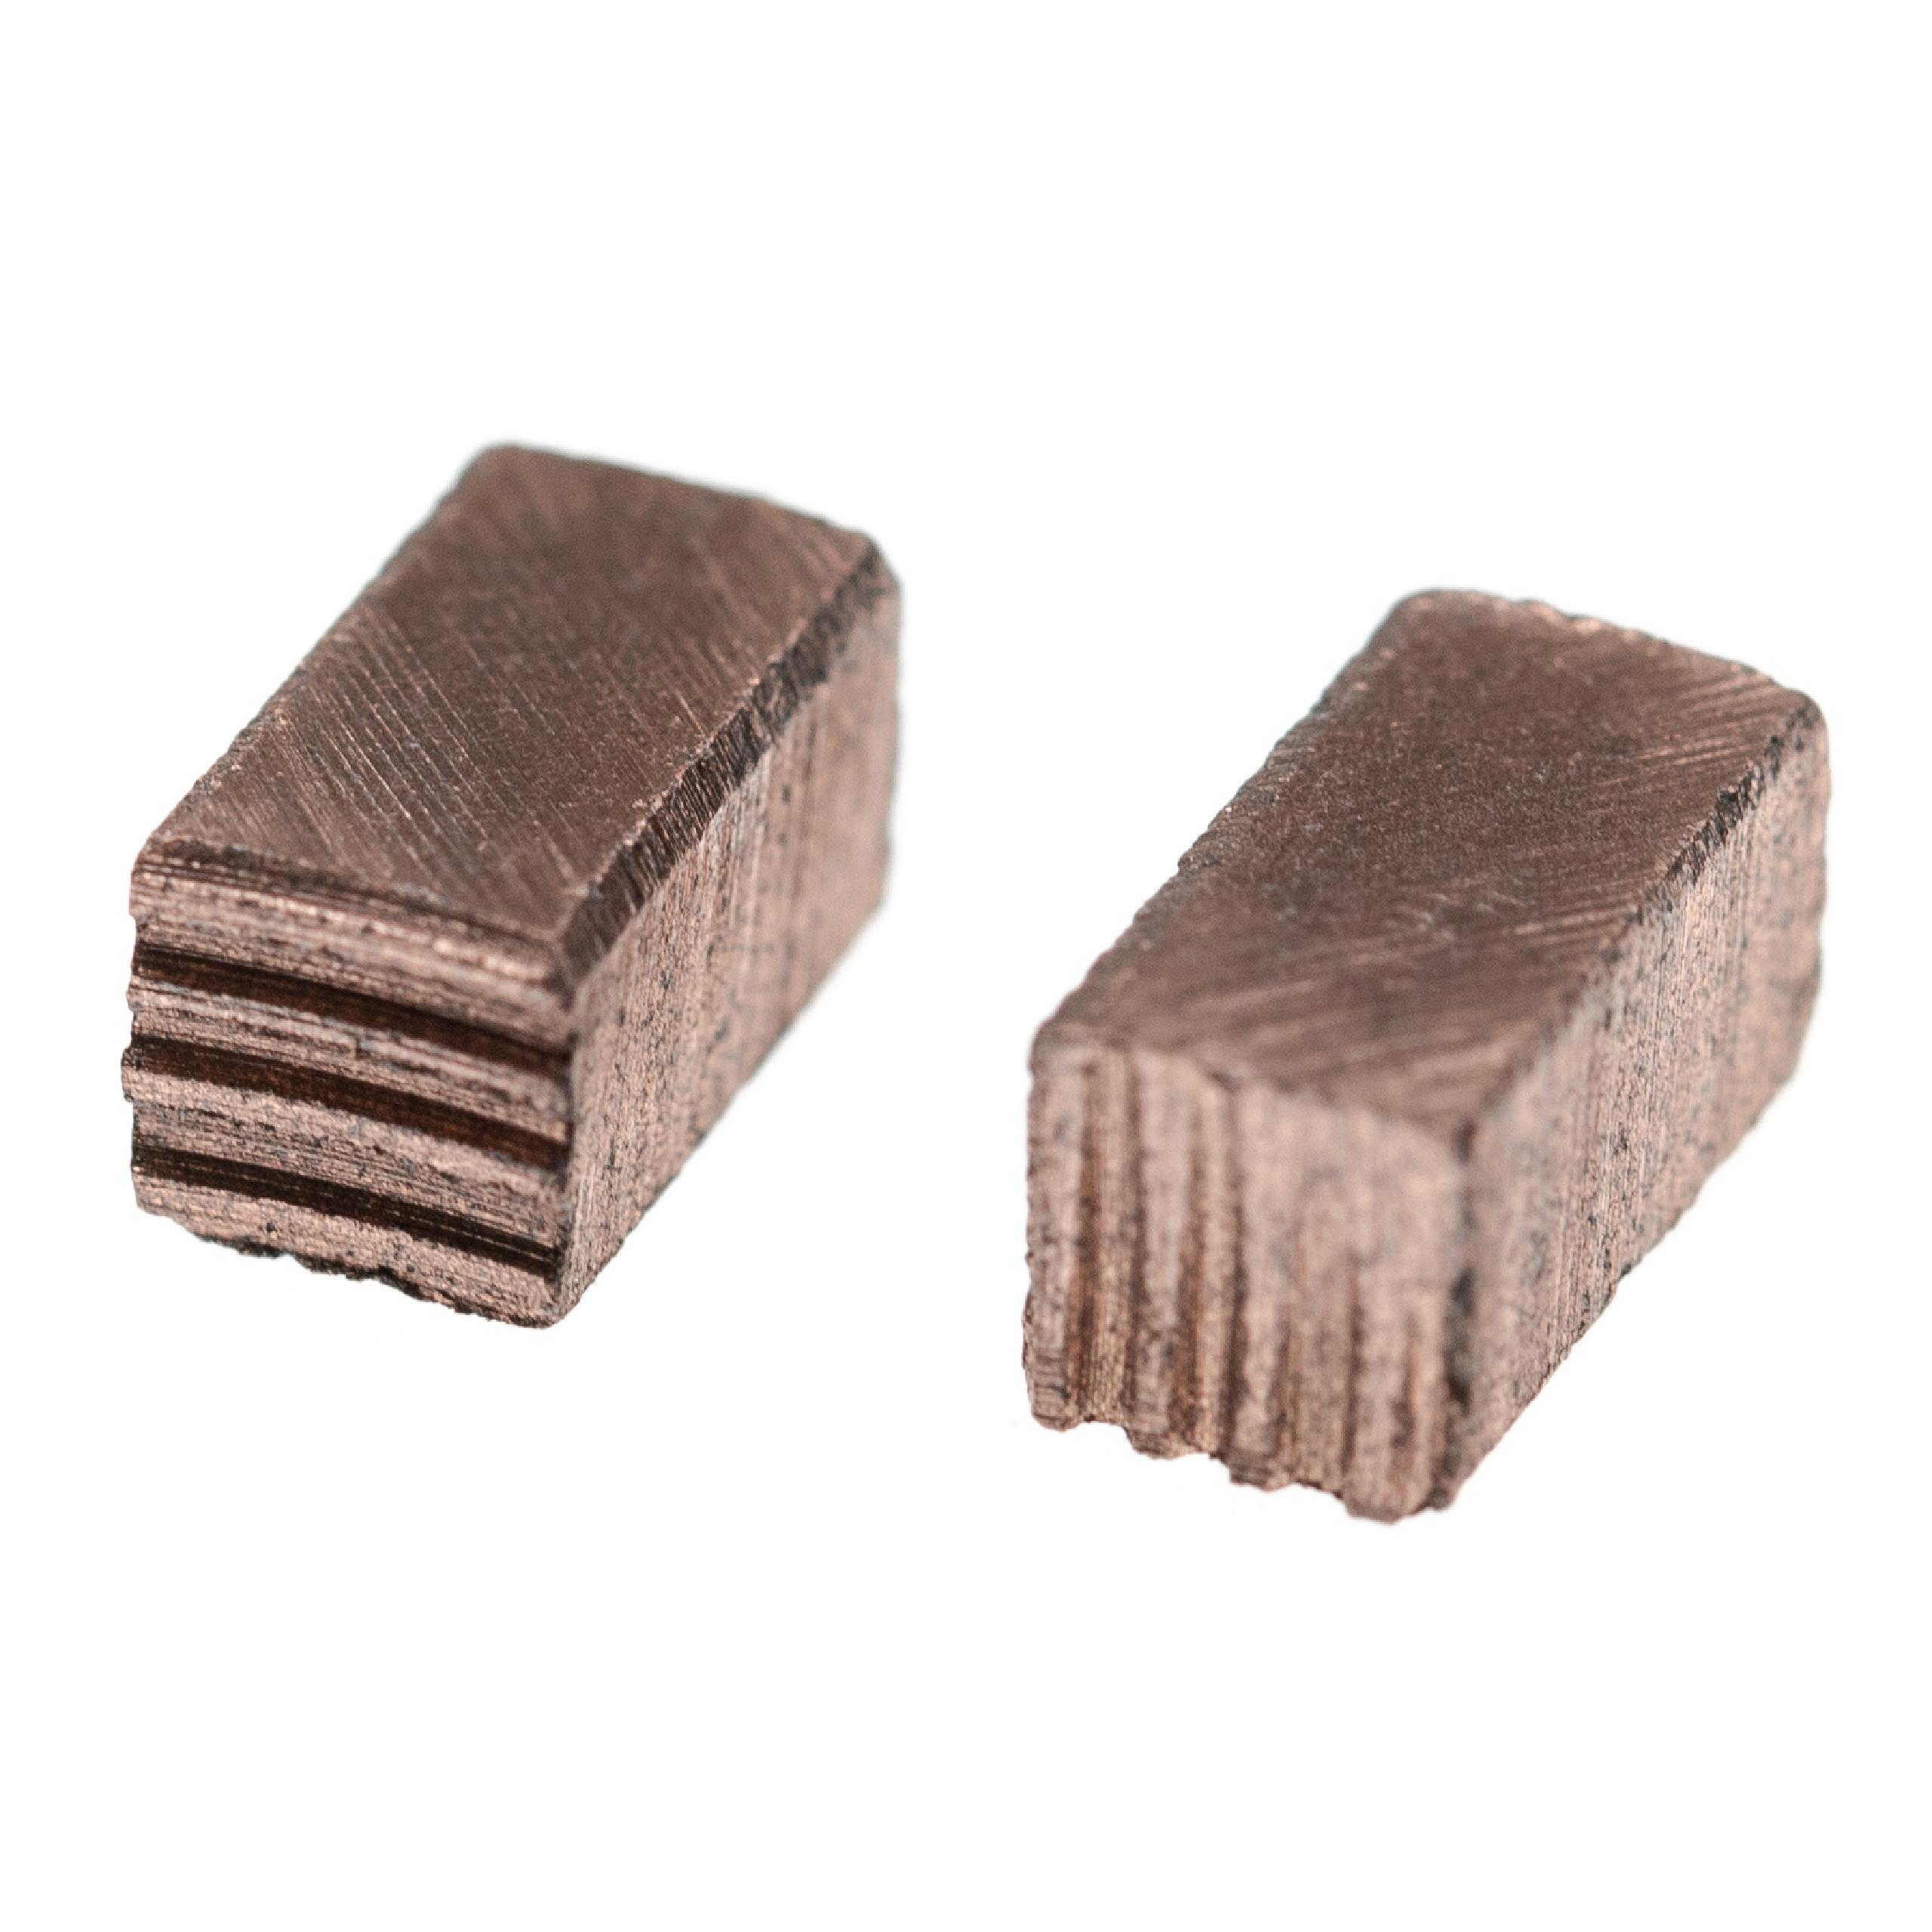 2x Spazzola carbone sostituisce 1126-1030-01 per utensili, 10 x 5 x 5 mm